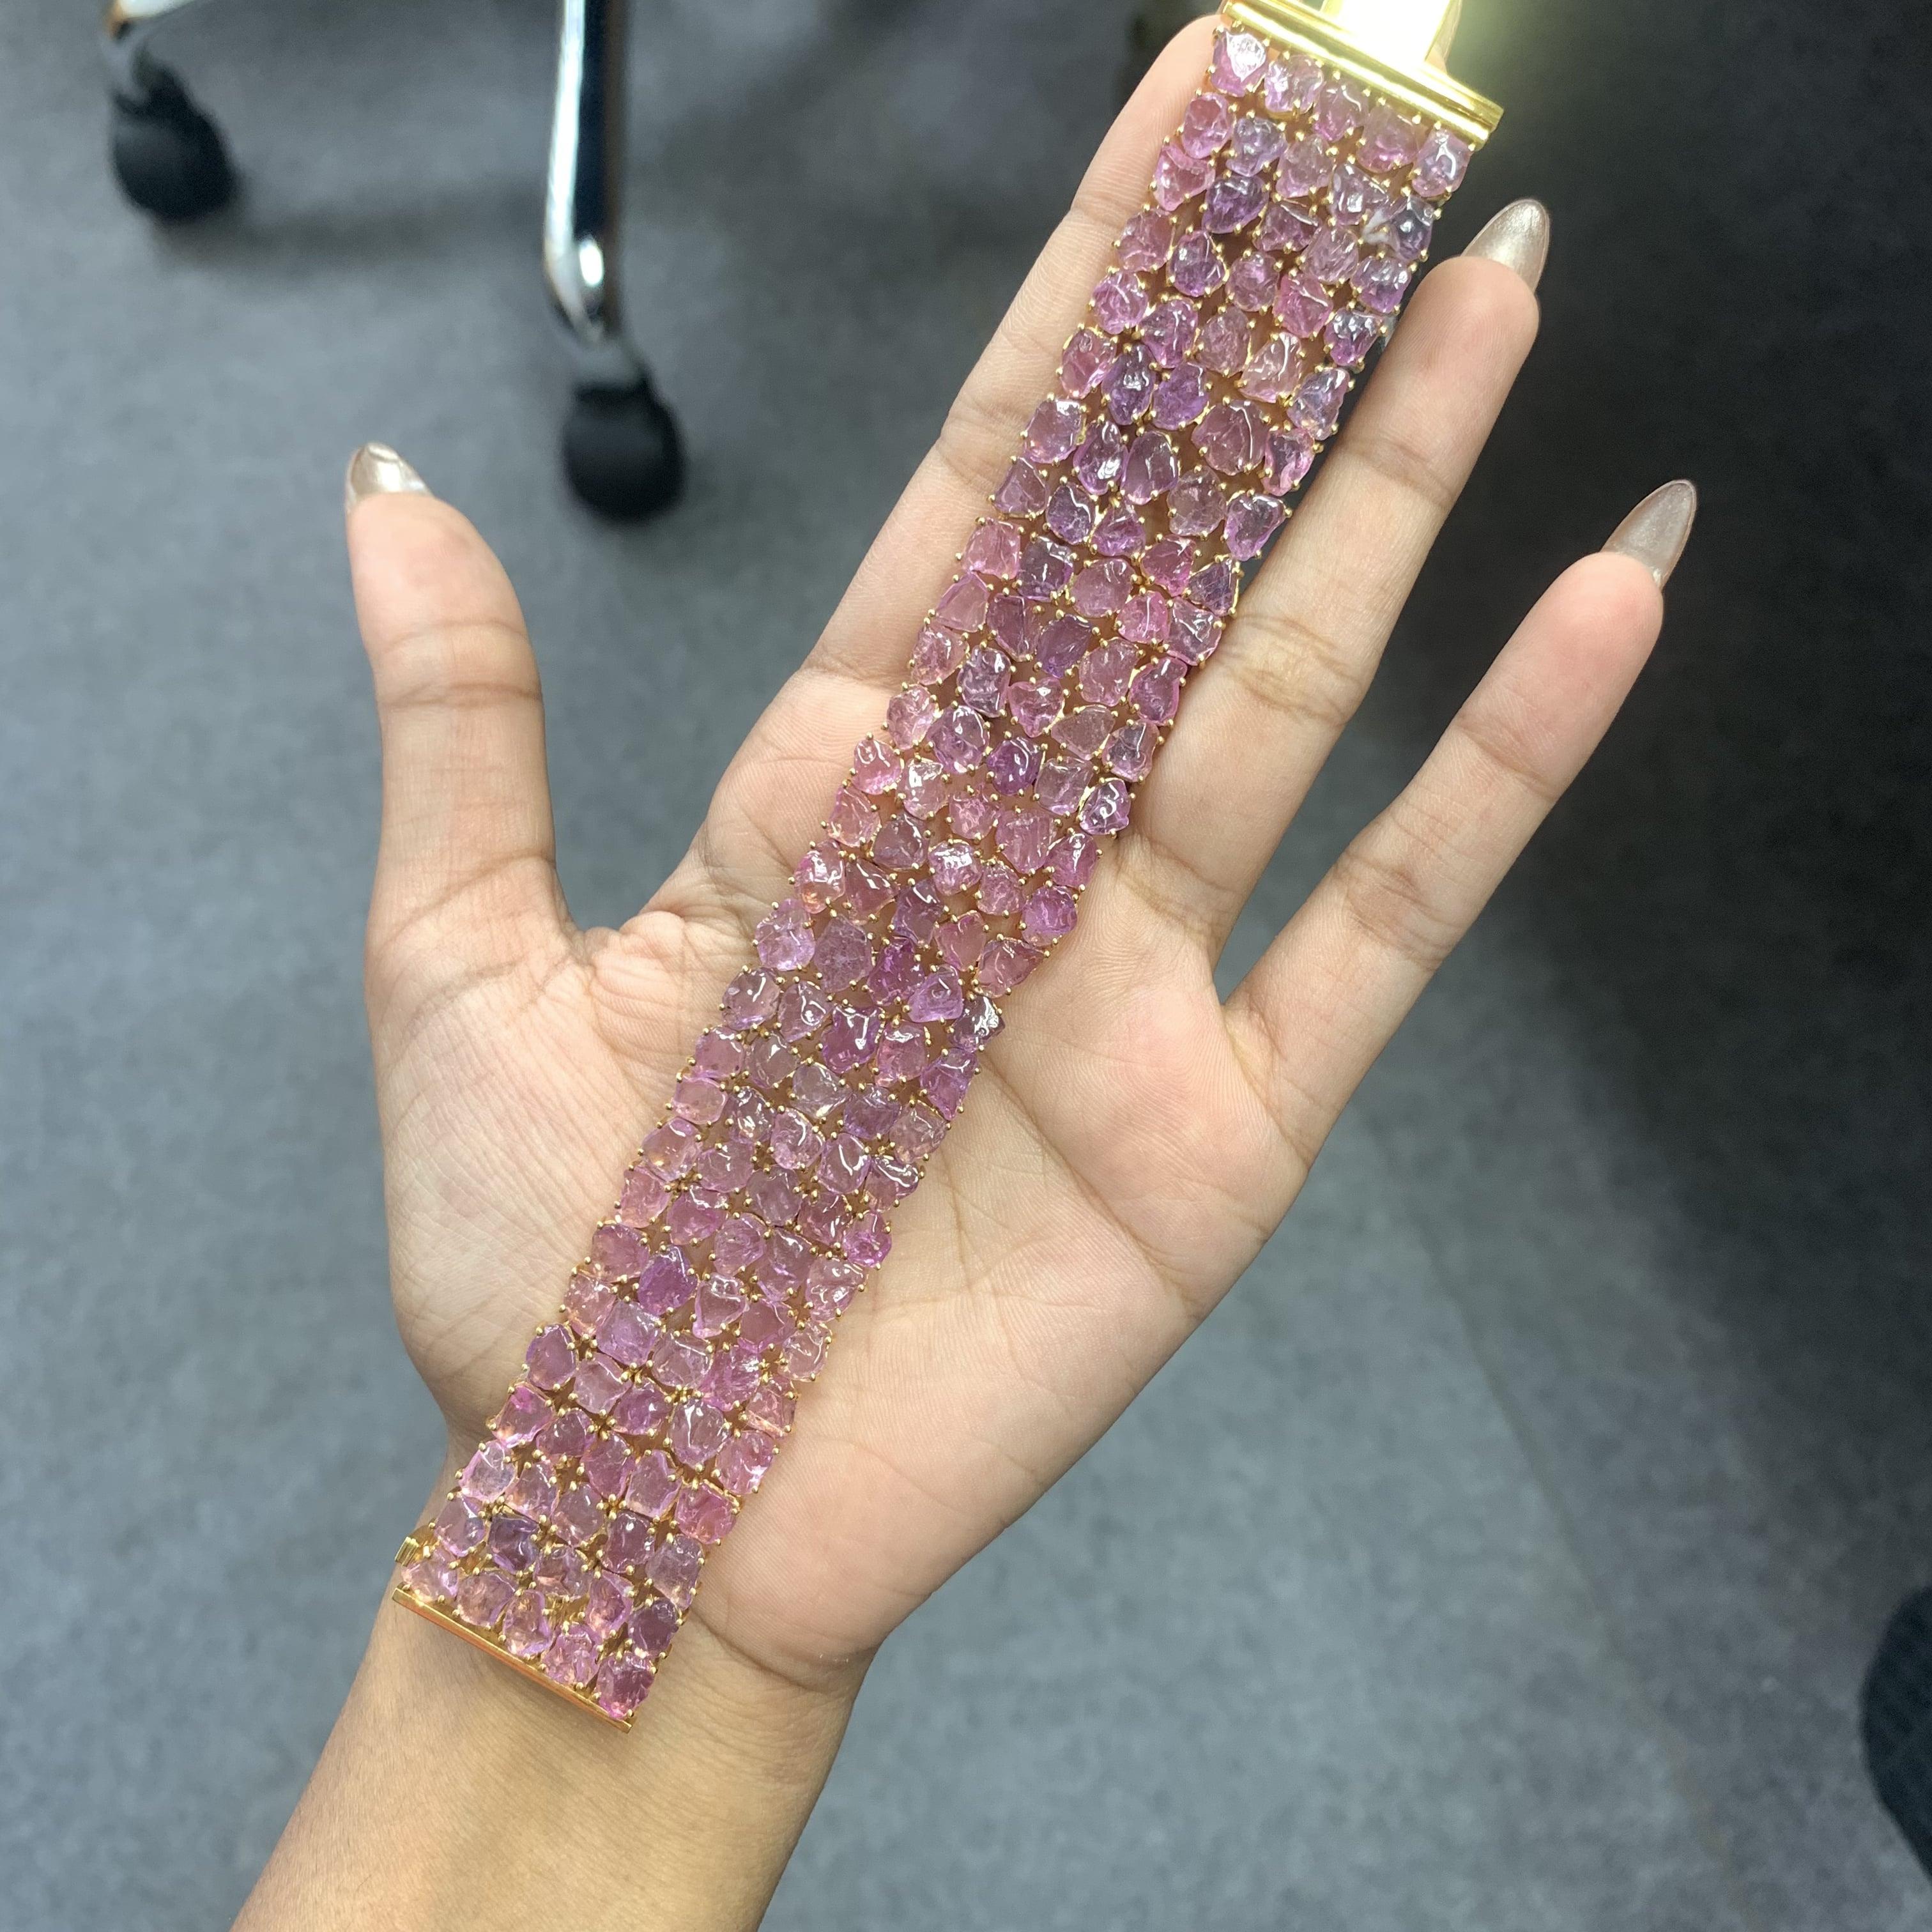 70.71 Carat Edwardian Pink Sapphire Statement Bracelet Handcrafted in 14k Gold For Sale 10